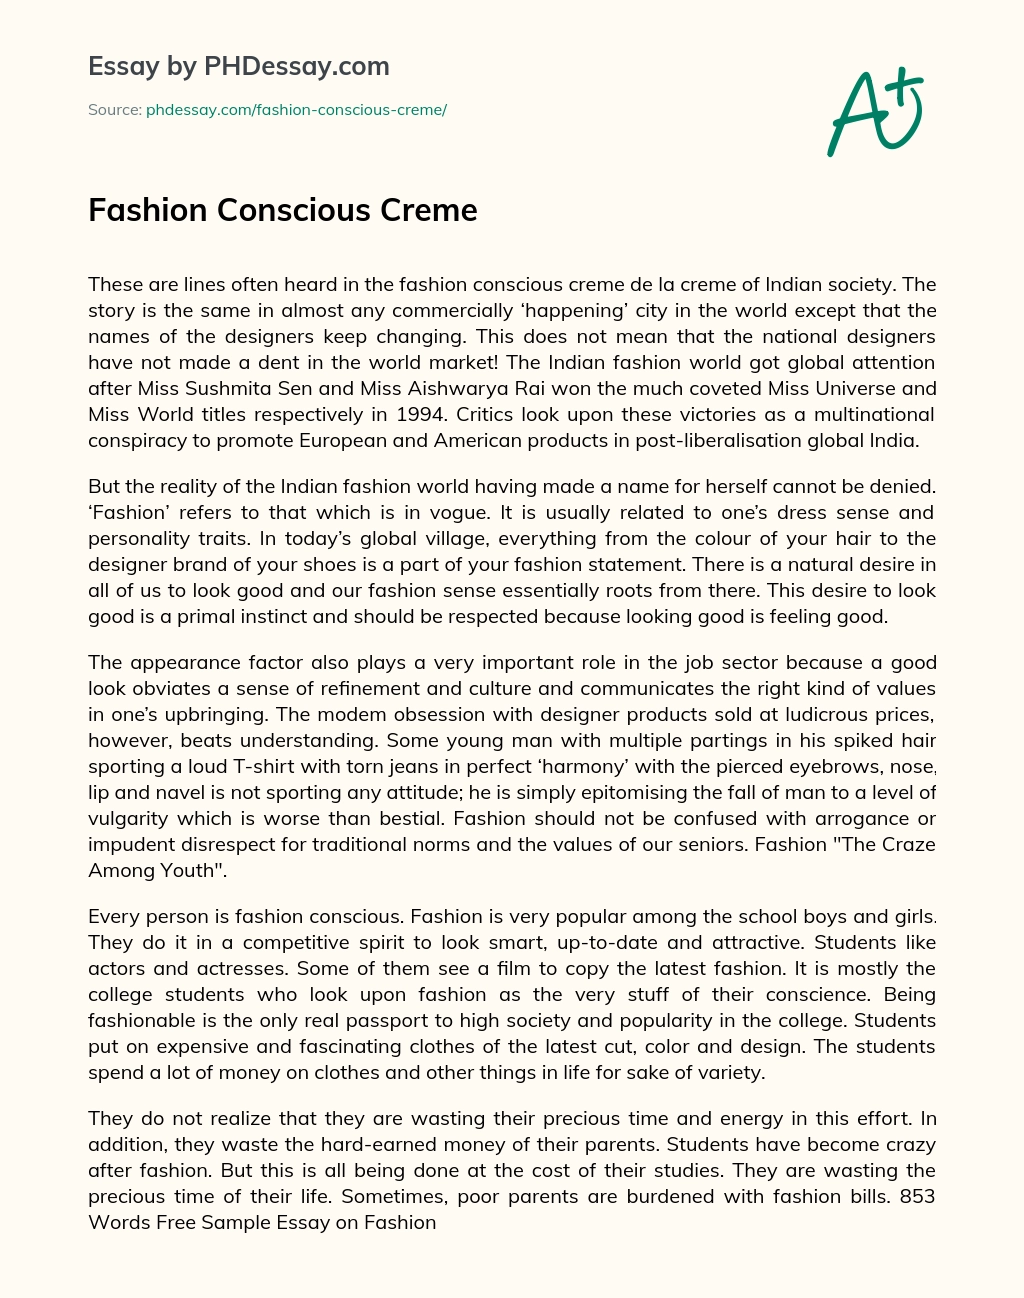 Fashion Conscious Creme essay